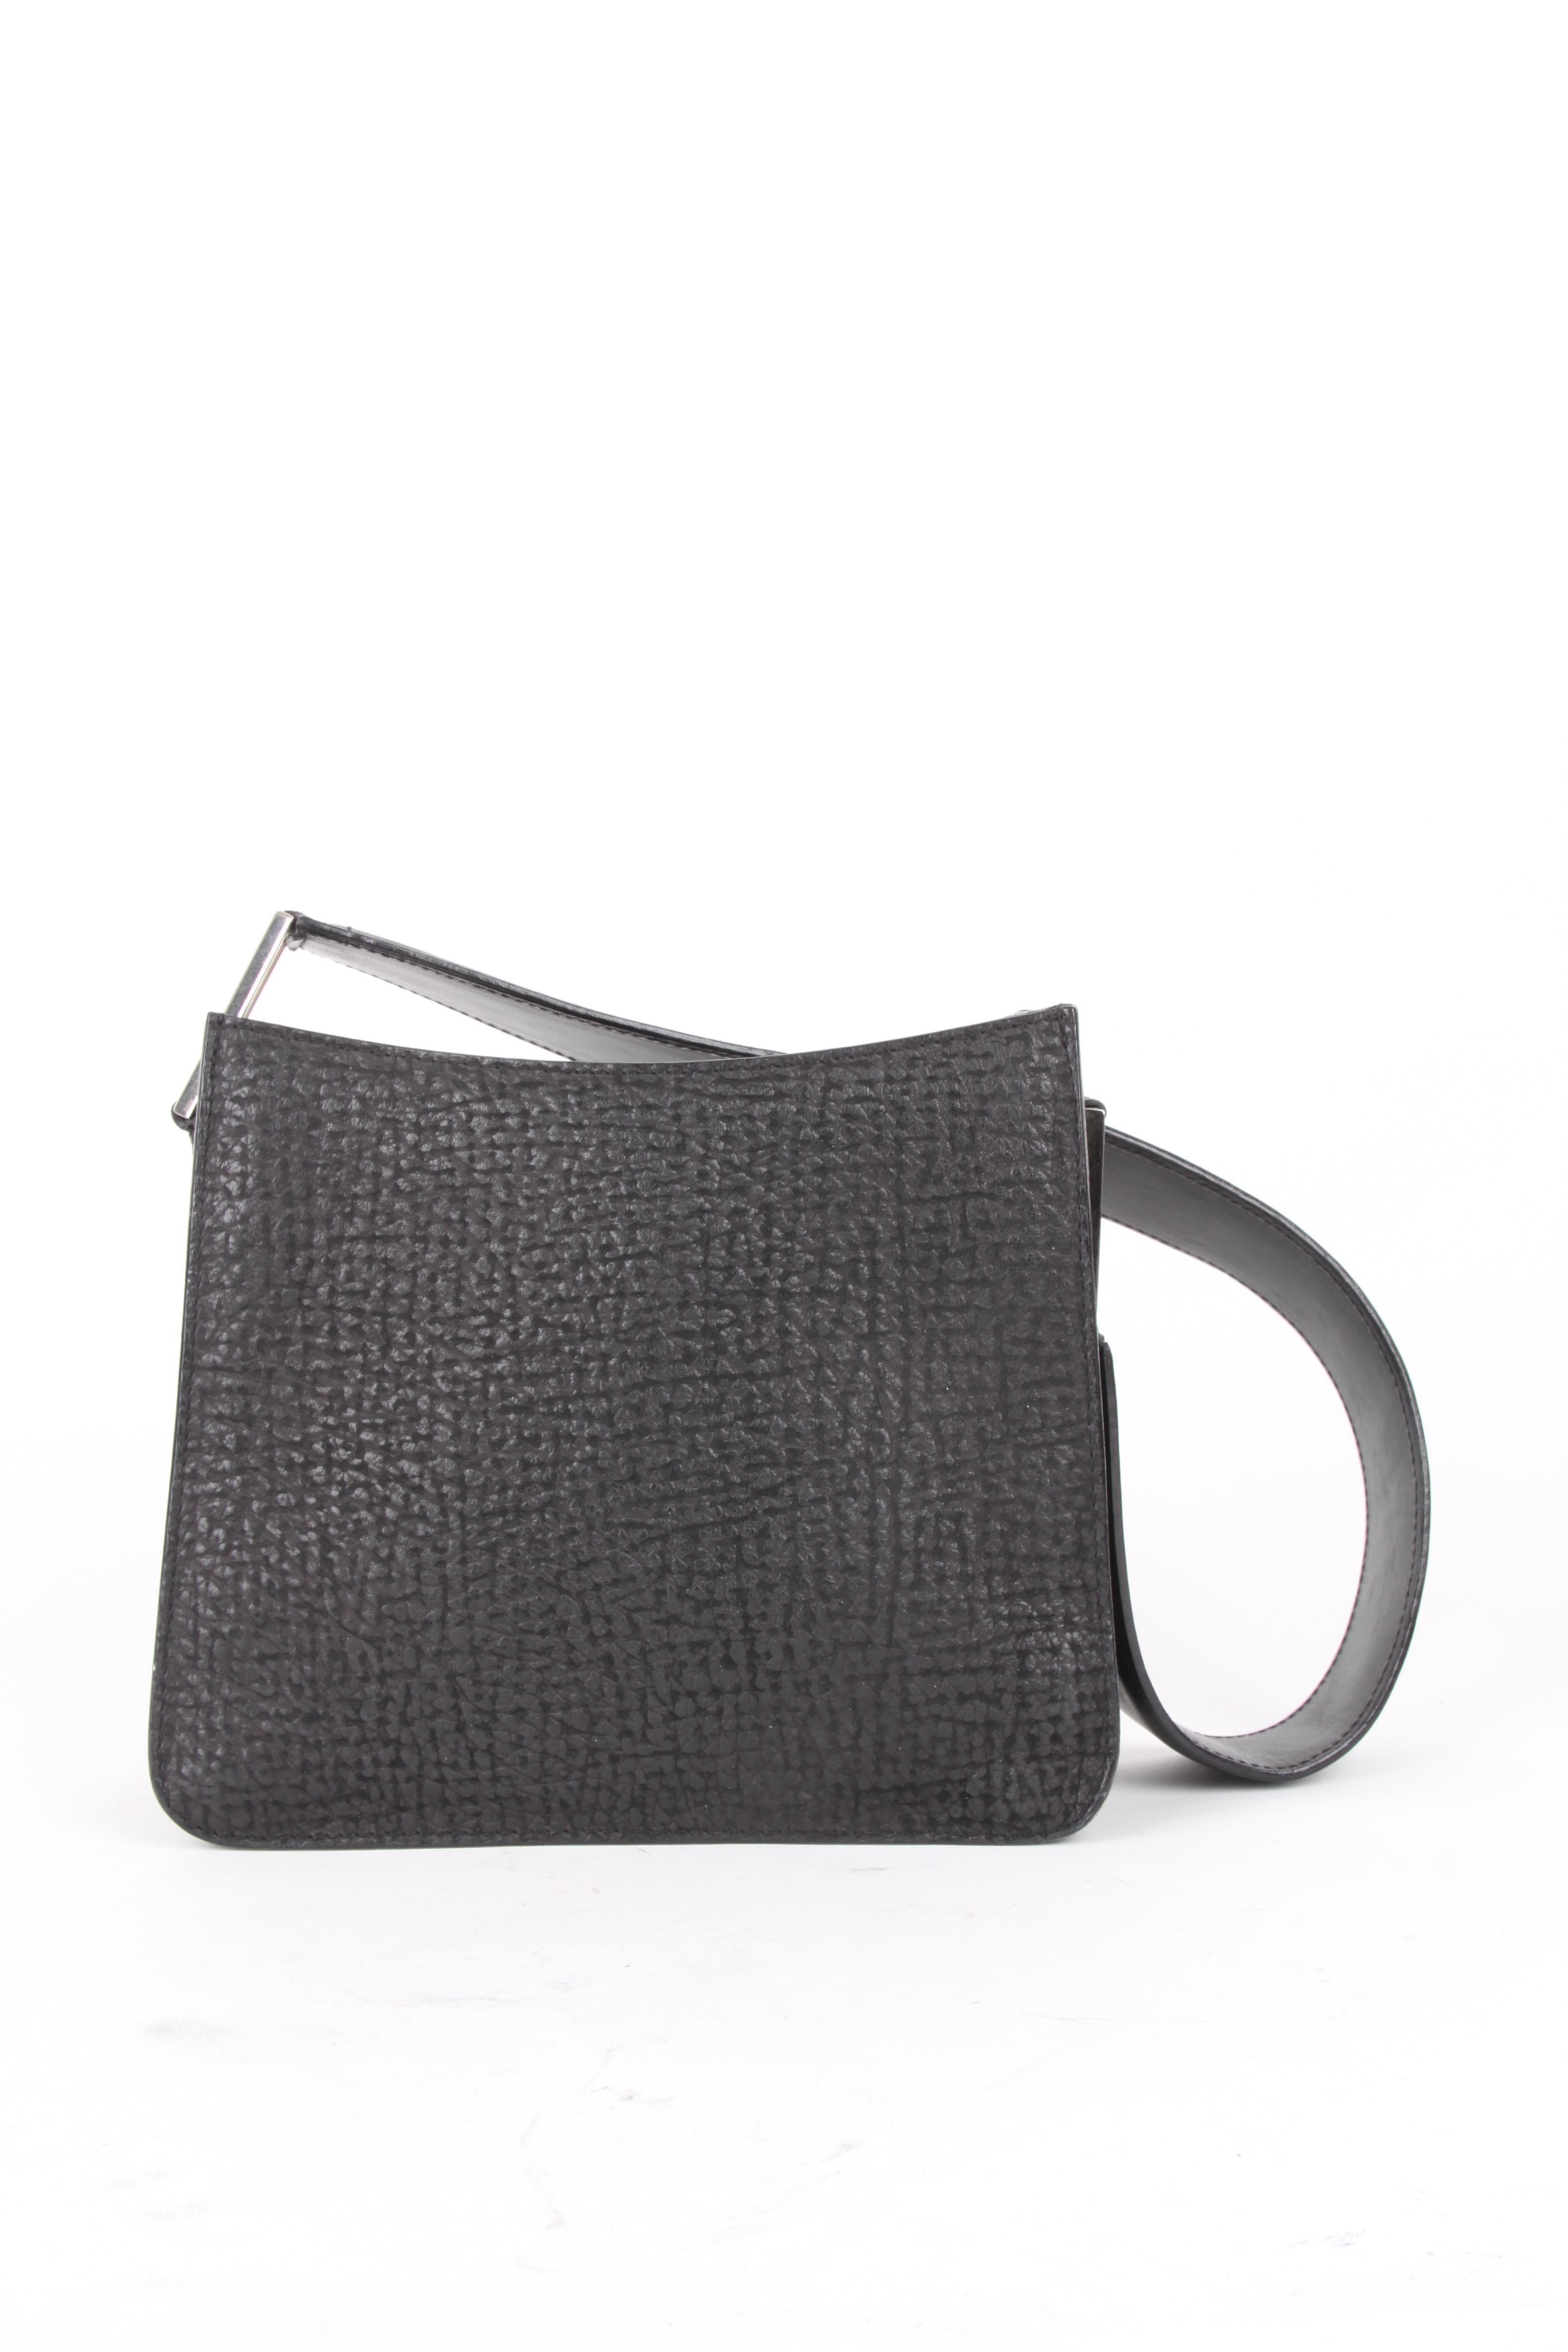 Women's or Men's Gianni Versace Black Silver Leather Shoulder Bag For Sale